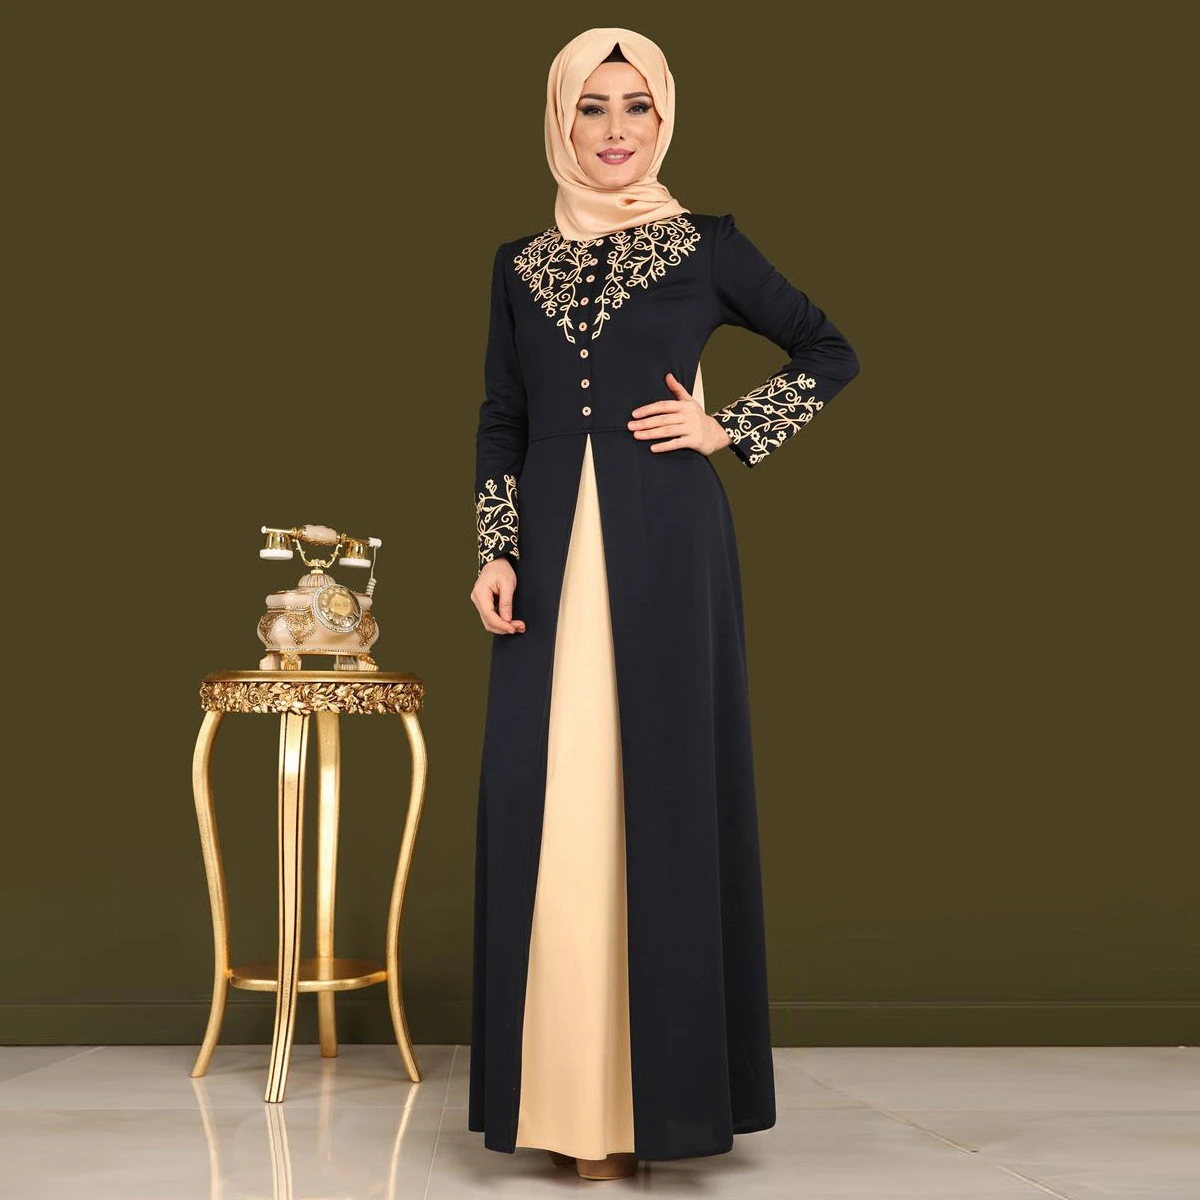 Buy New Elegant Arab Women Muslim Dress 4color Islamic Clothing